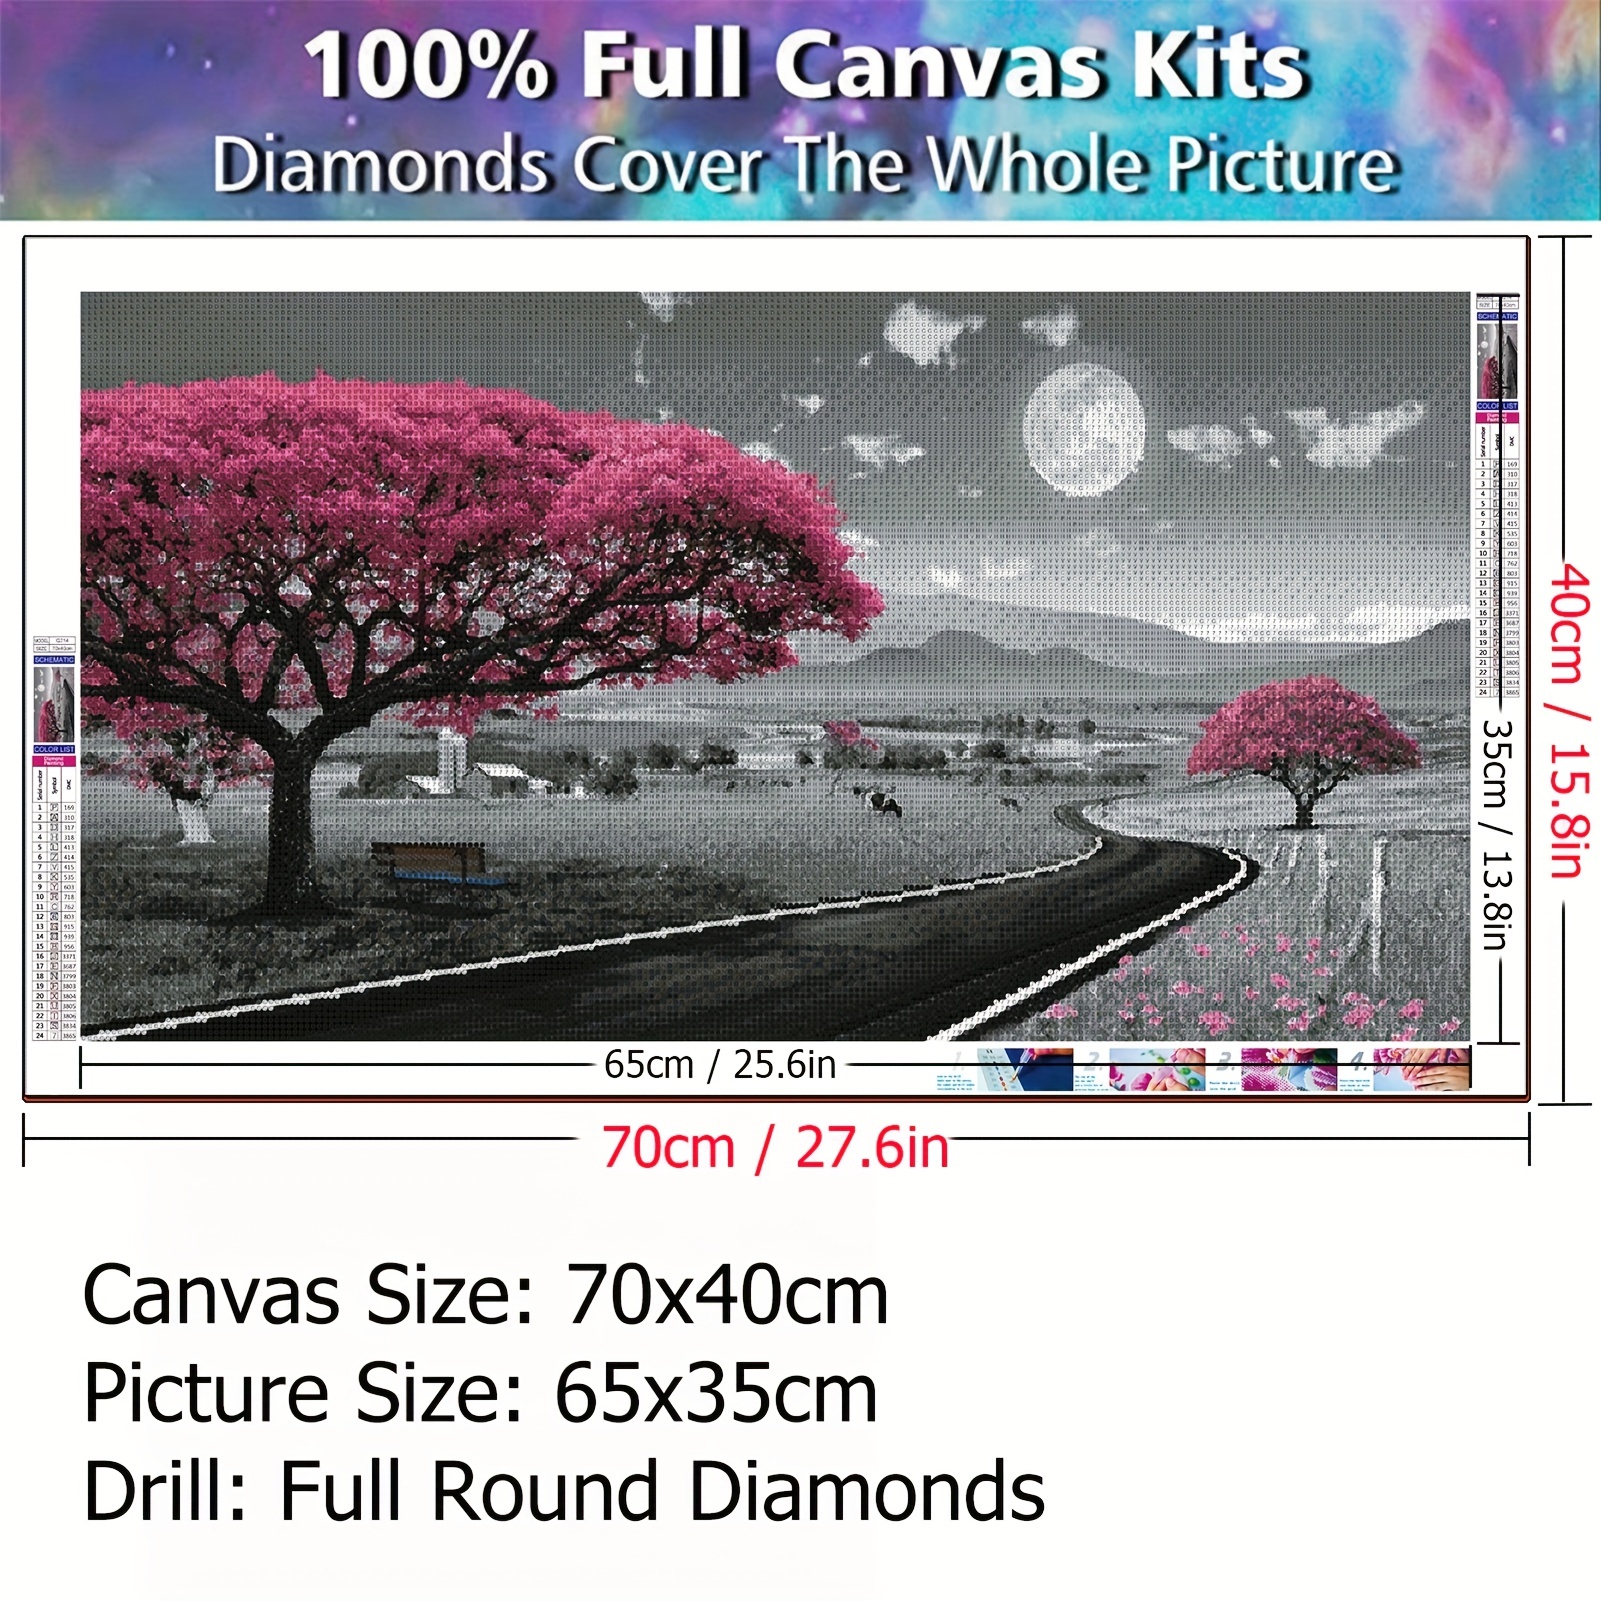 YALKIN Red Tree Desk Large Diamond Painting Kits for Adults (27.6